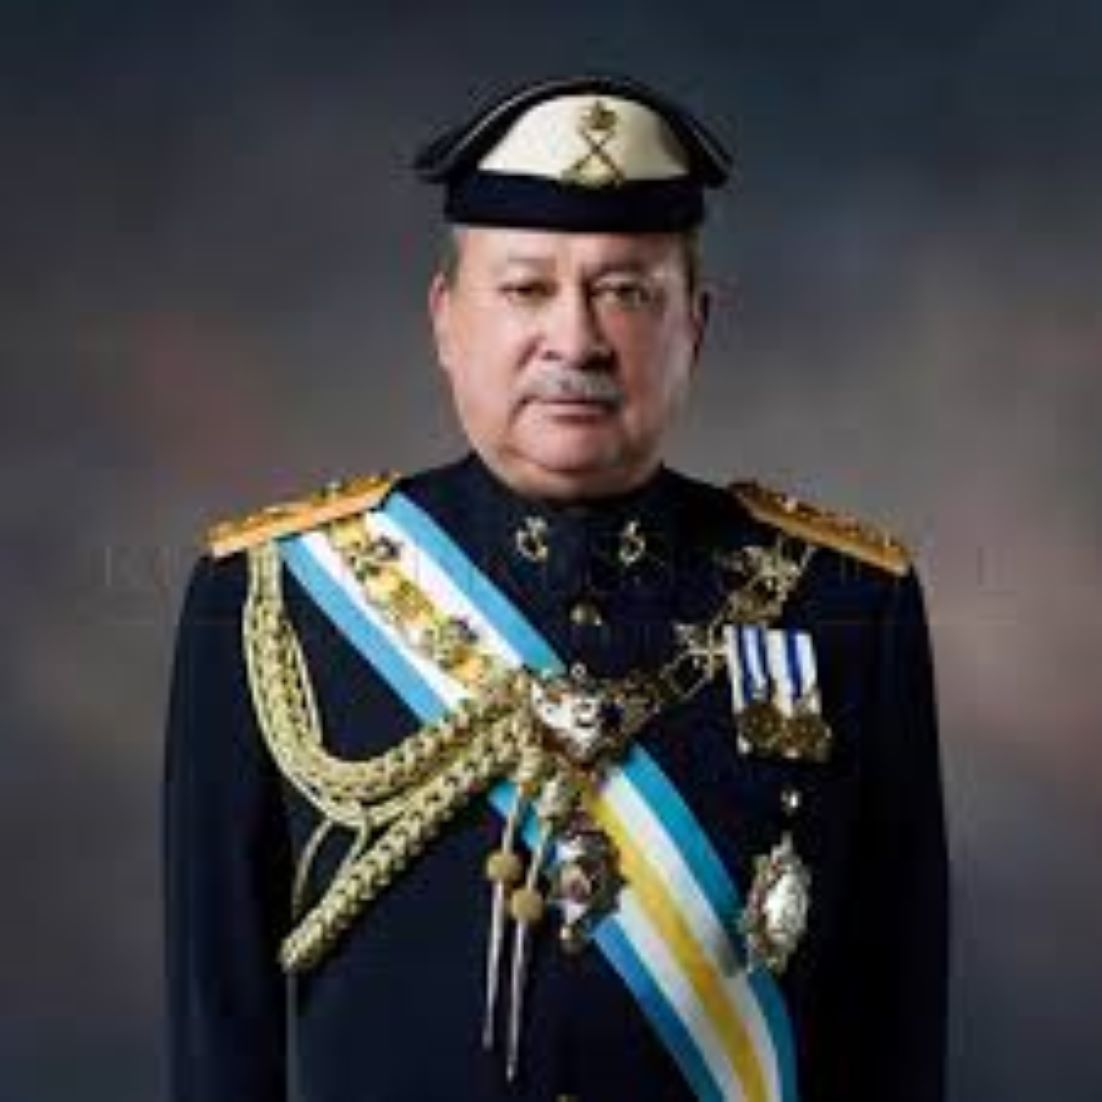 Sultan Ibrahim Of Johor State Named As New Malaysian King